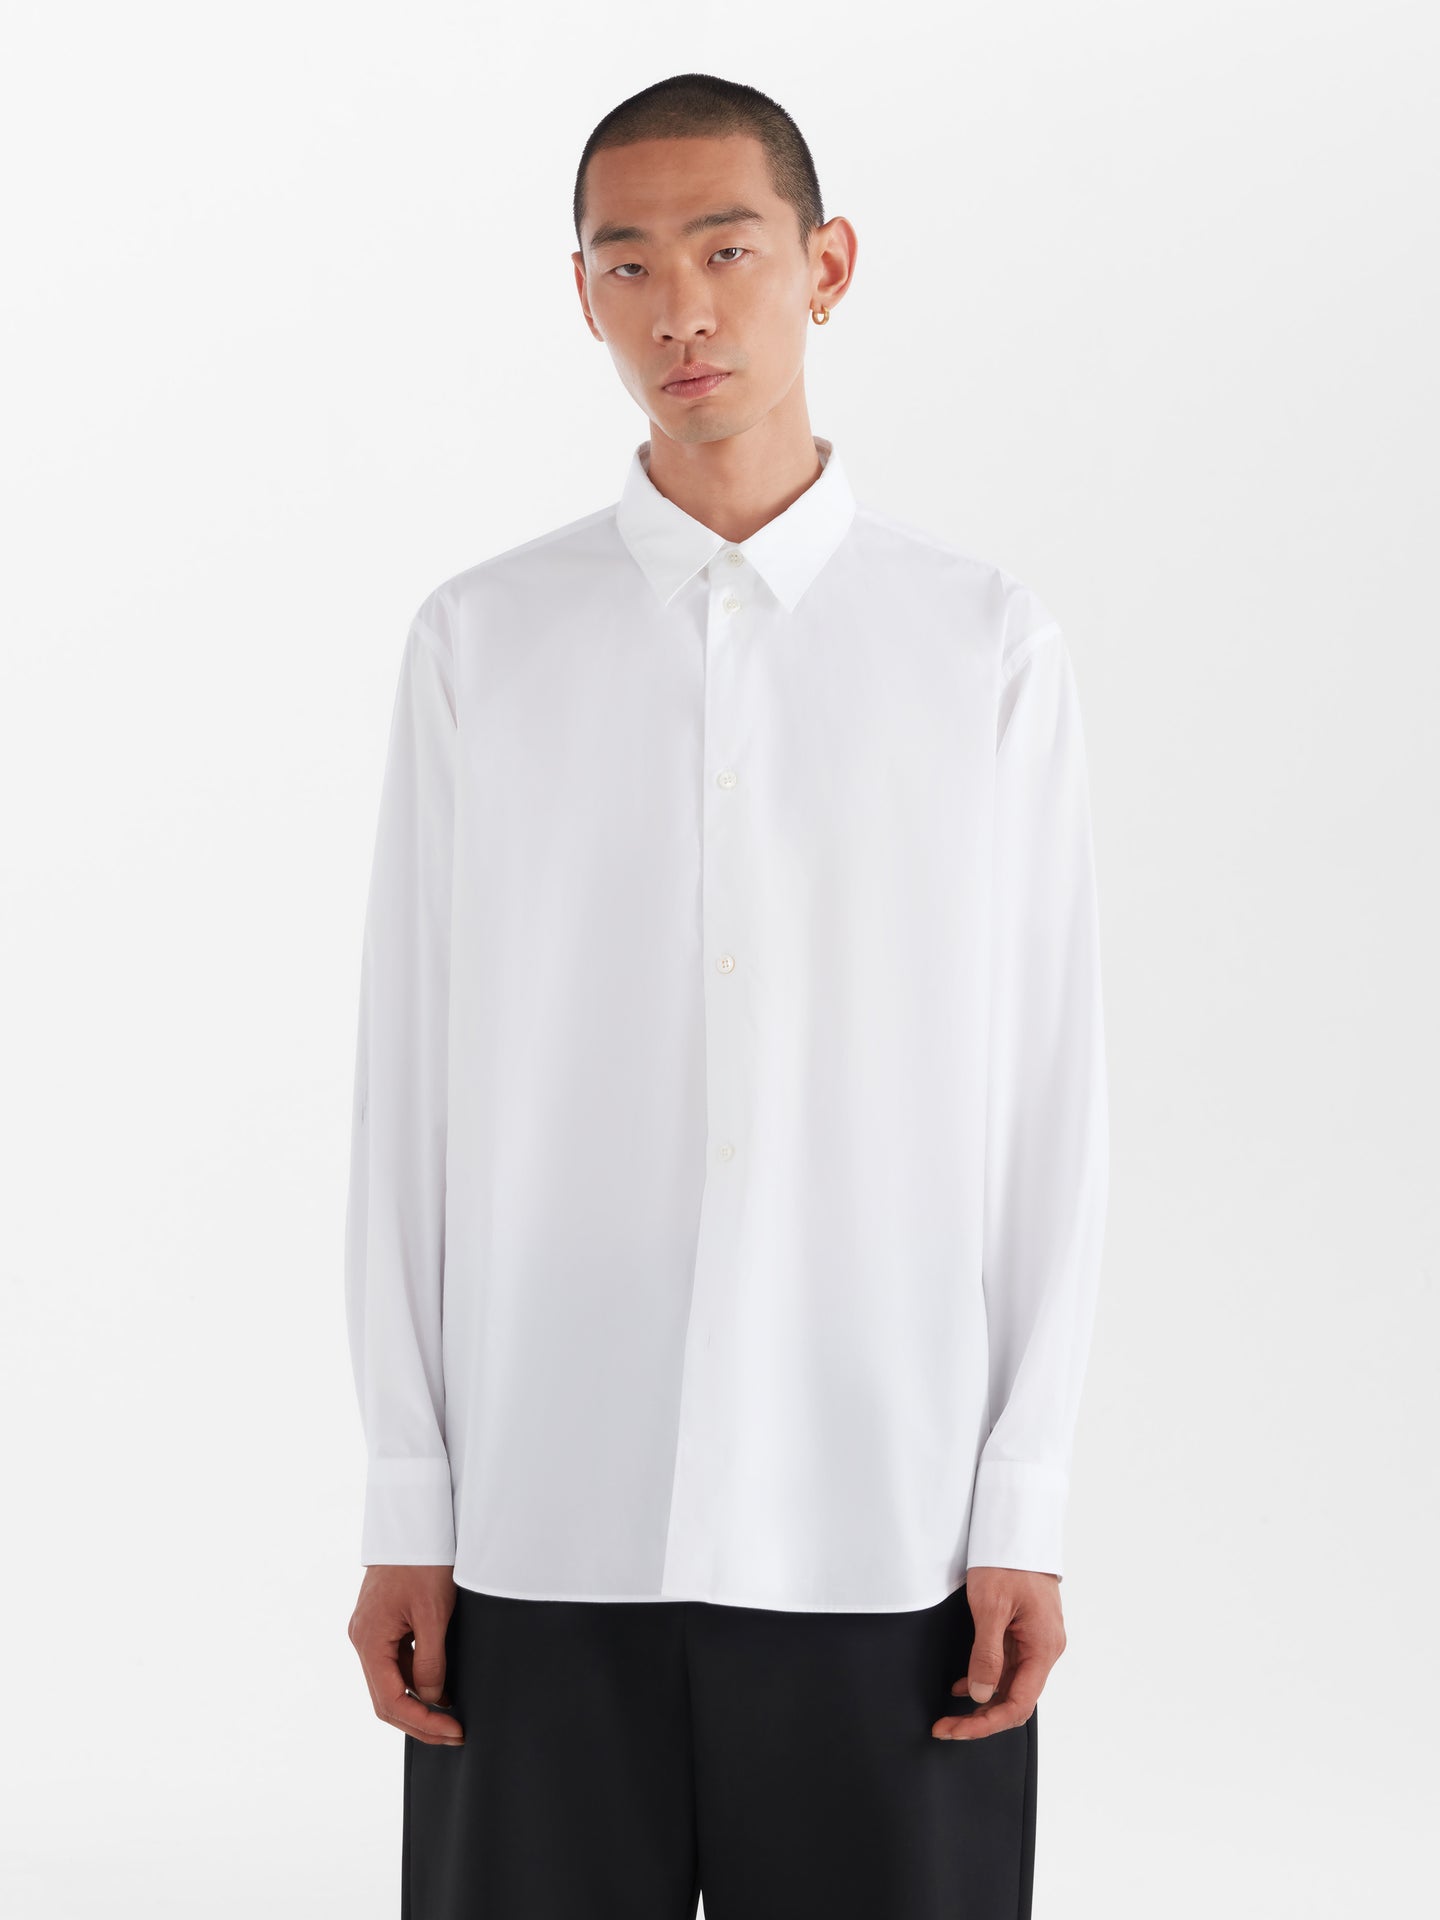 Santo Shirt in Optic White